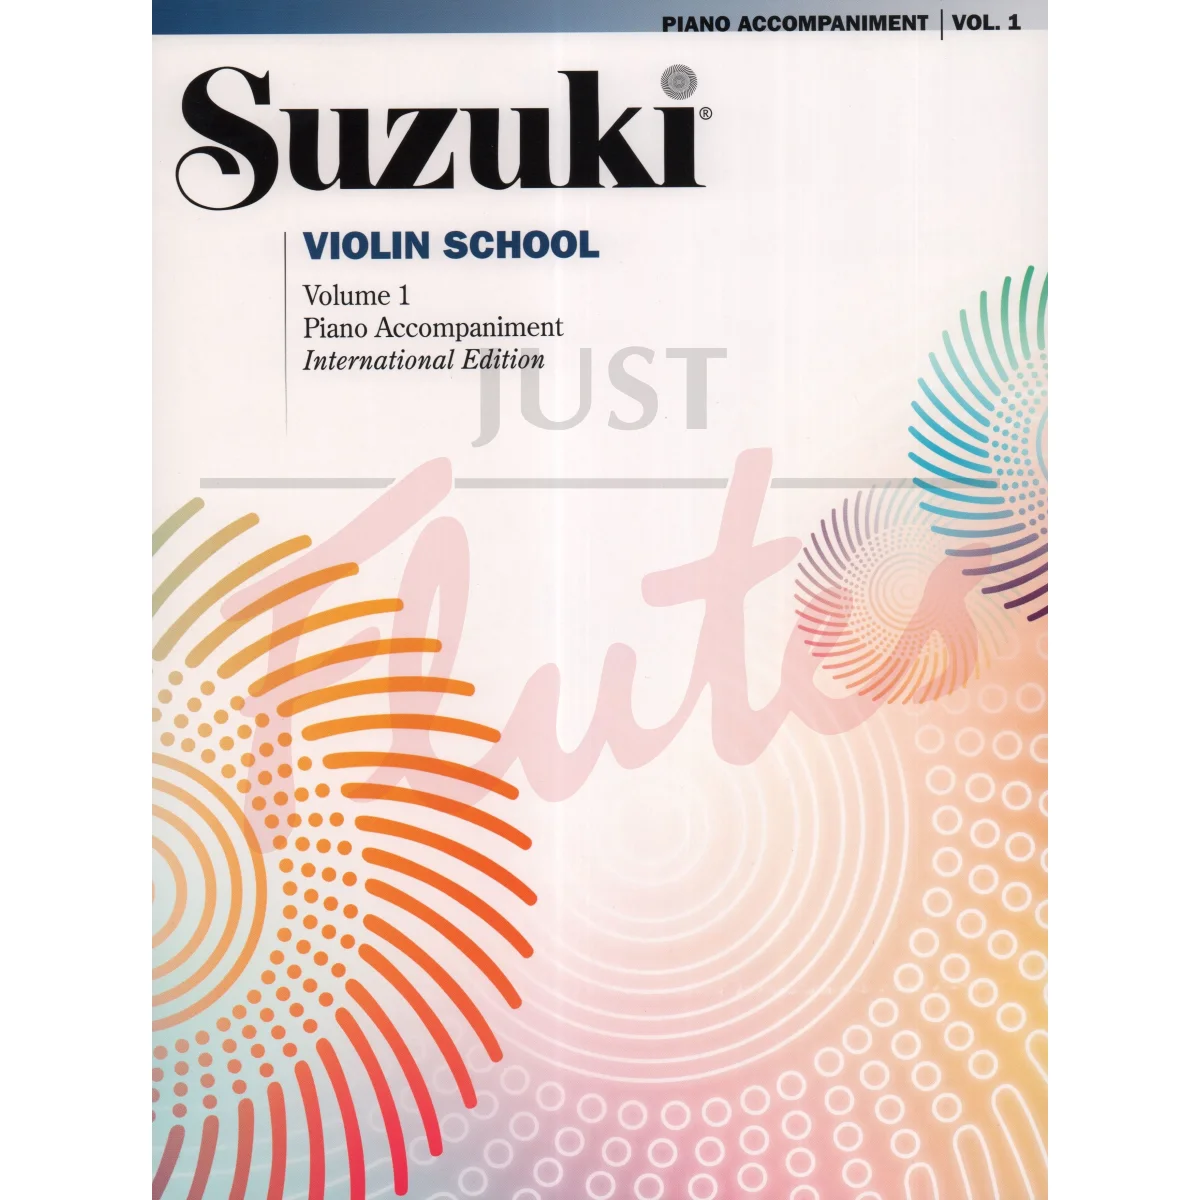 Suzuki Violin School Vol 1 (International Edition) [Piano Accompaniment]